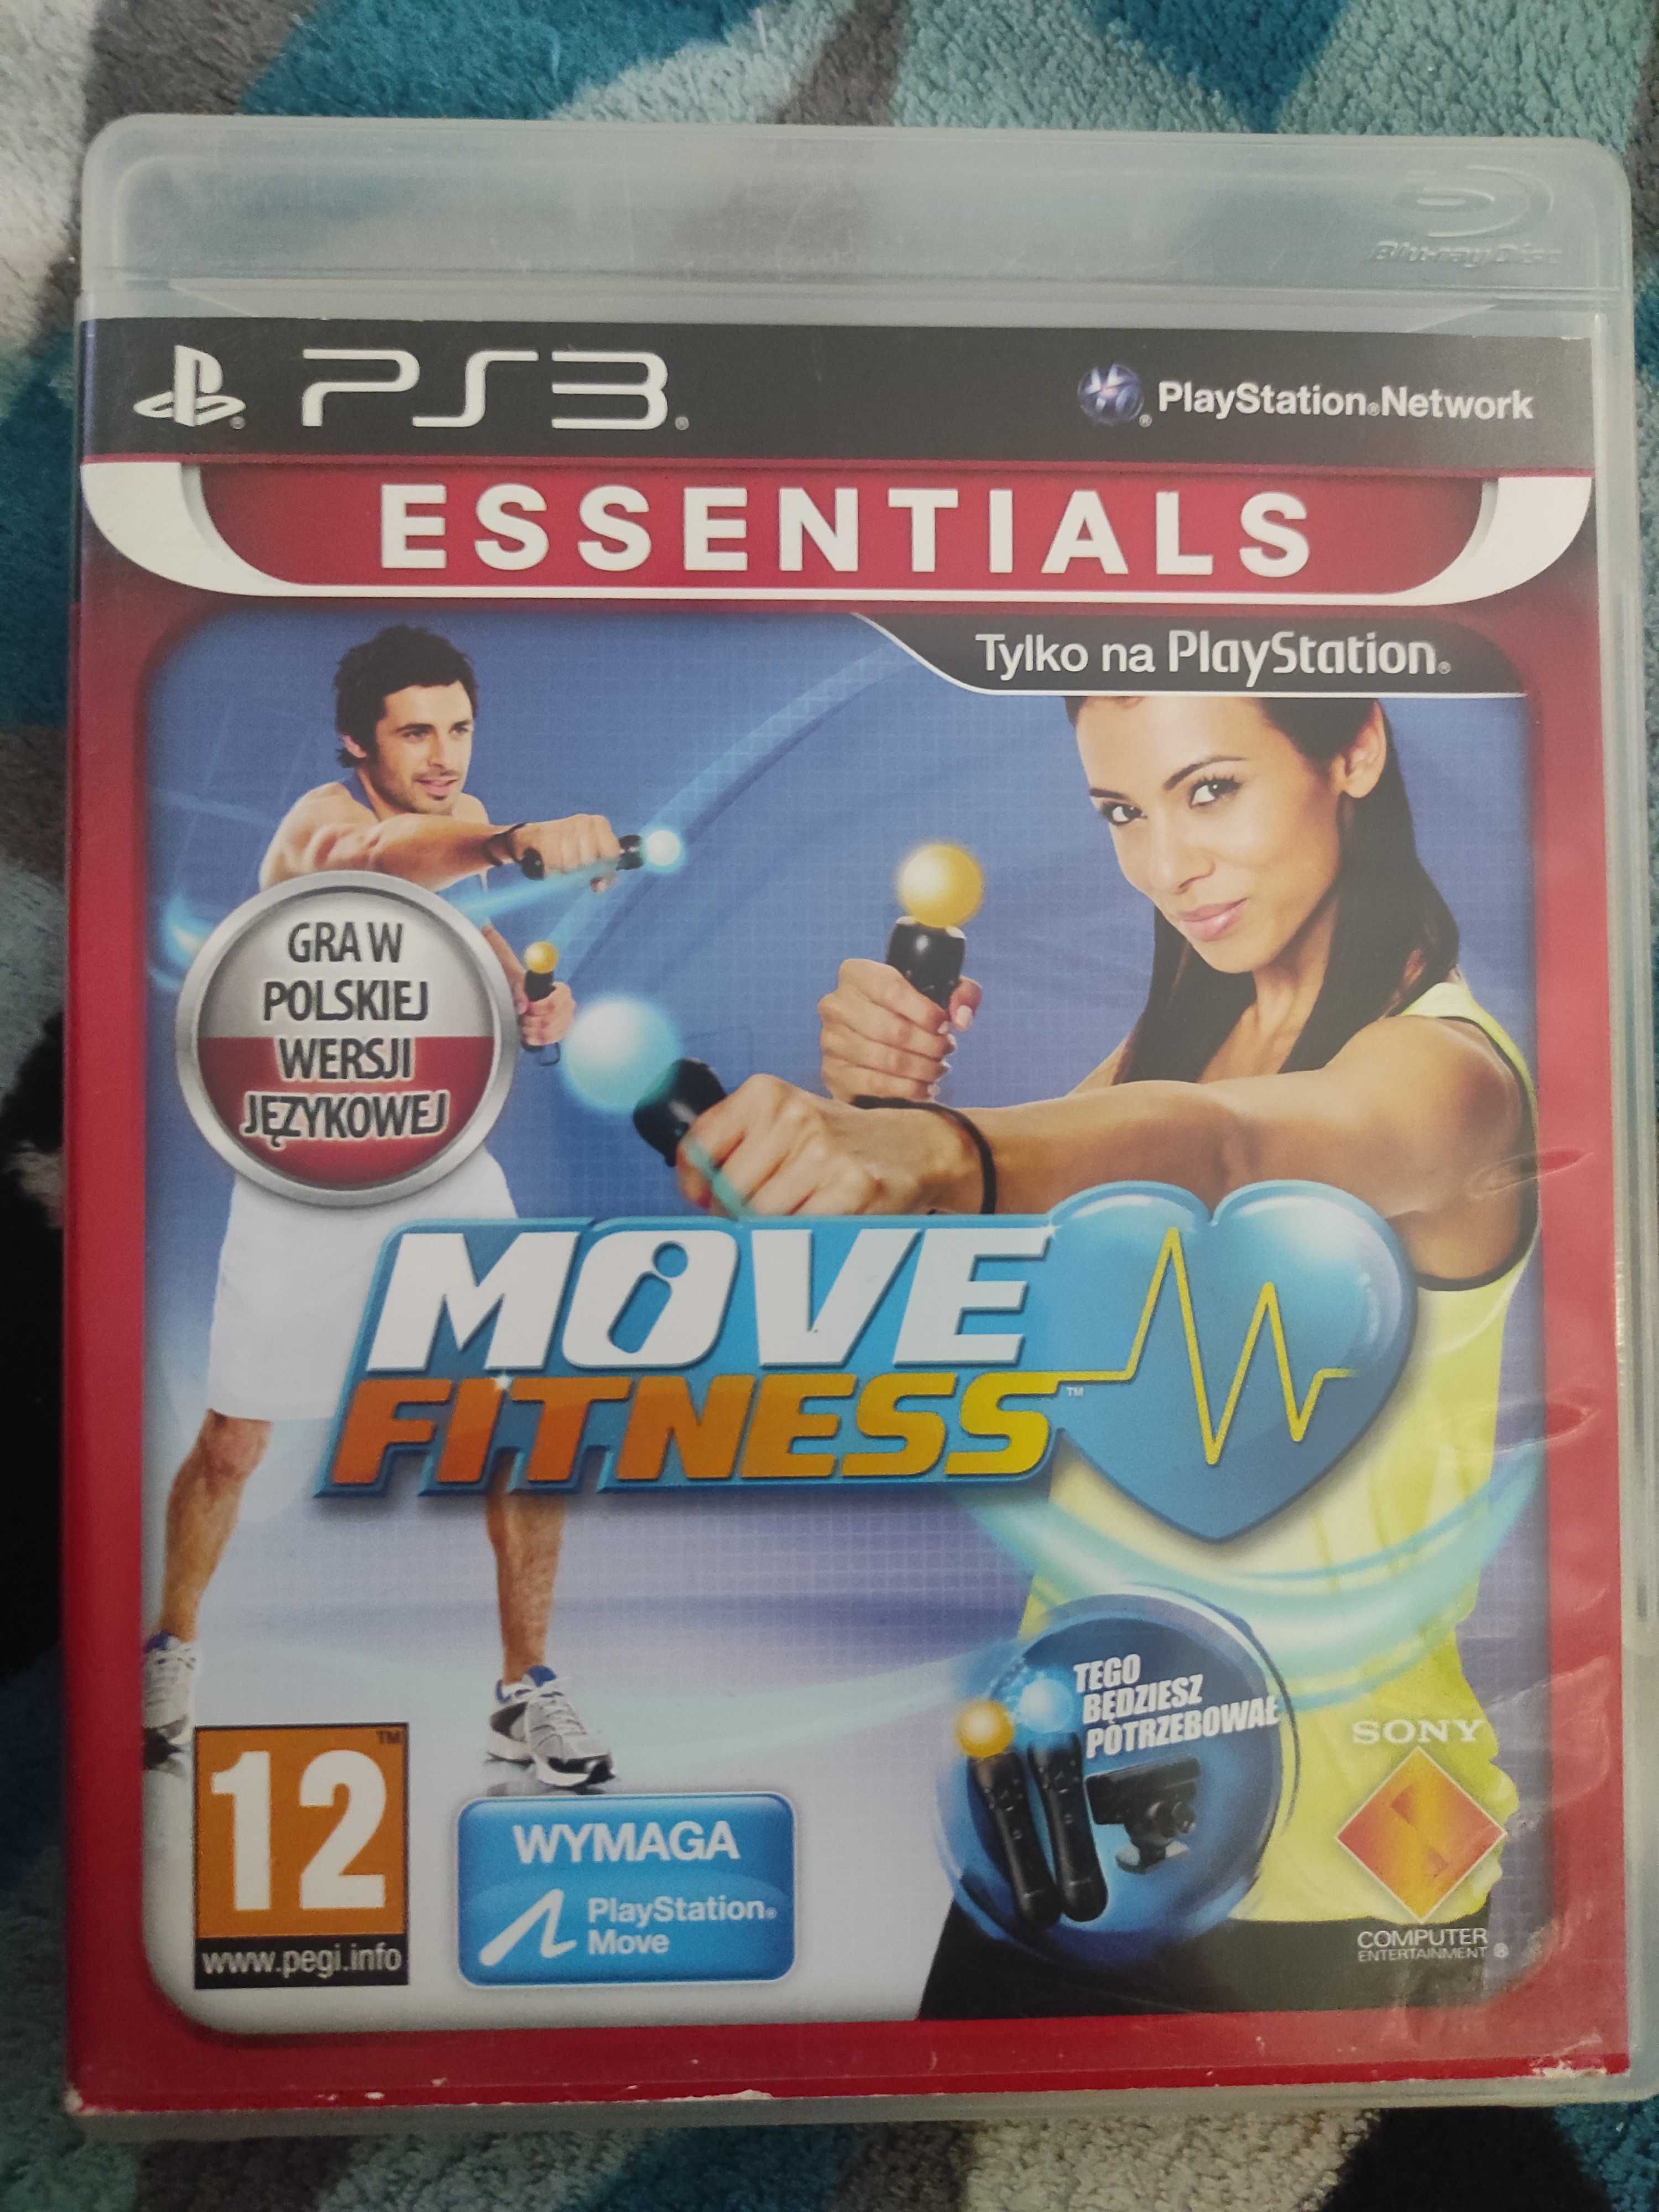 Move fitness ps3 essentials